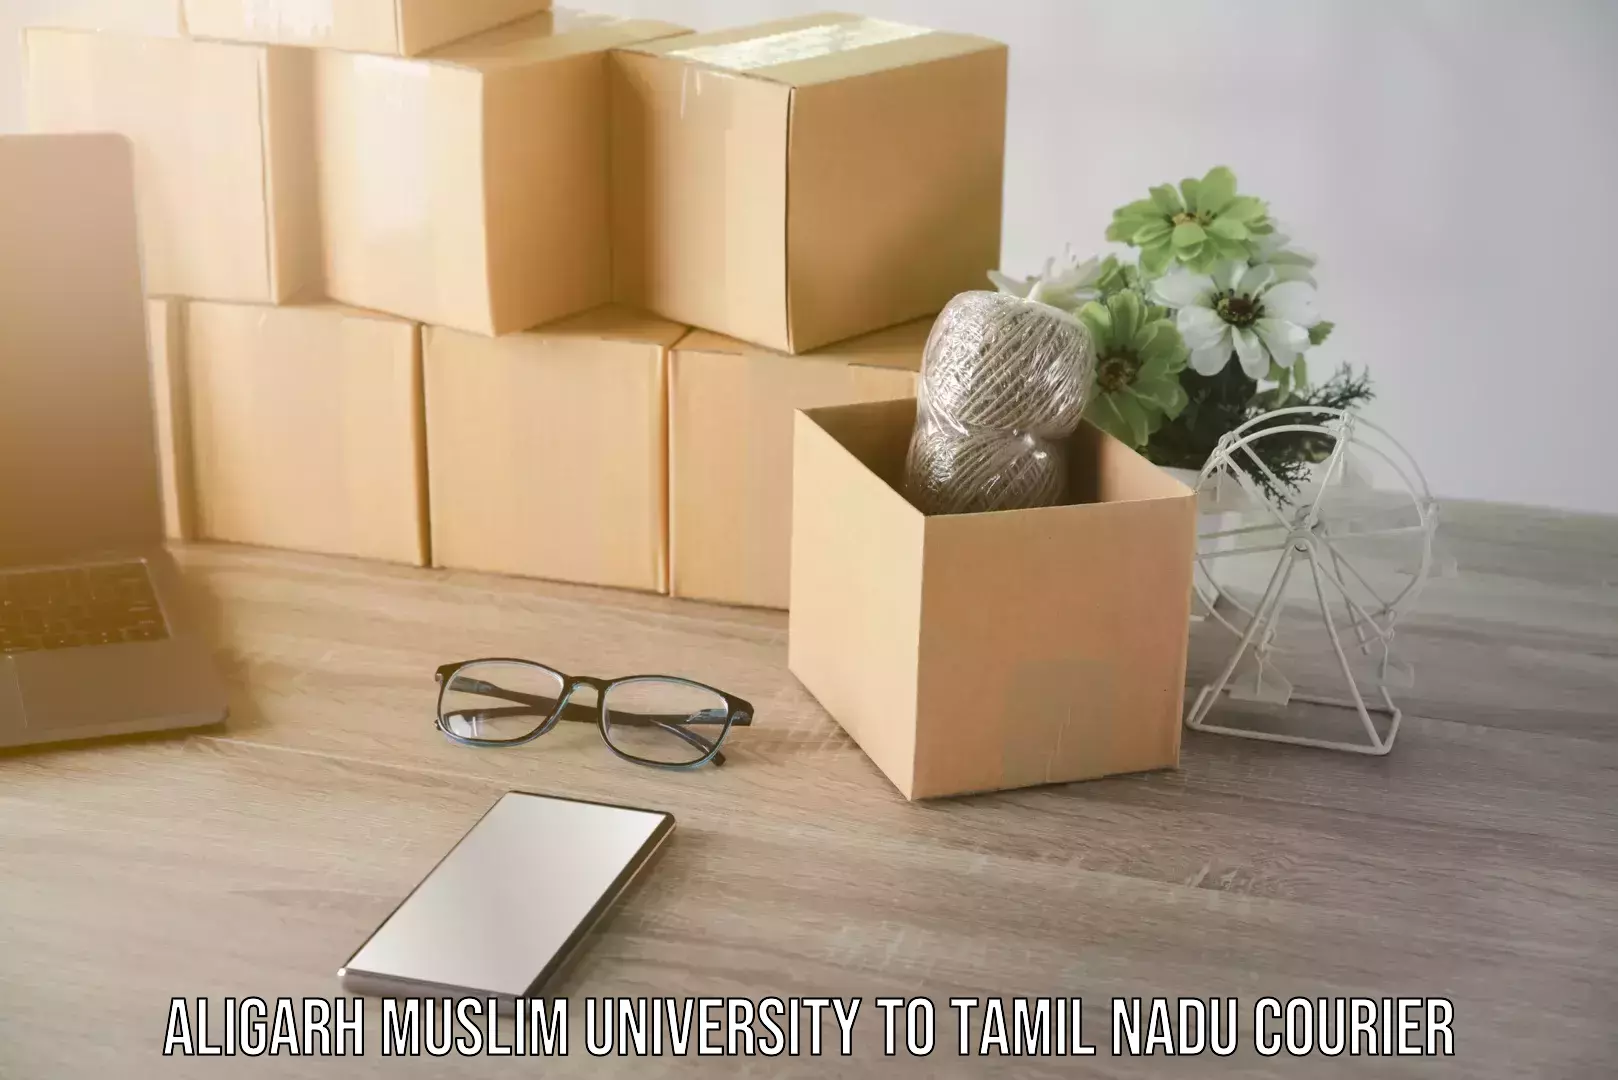 Online courier booking Aligarh Muslim University to Tamil Nadu